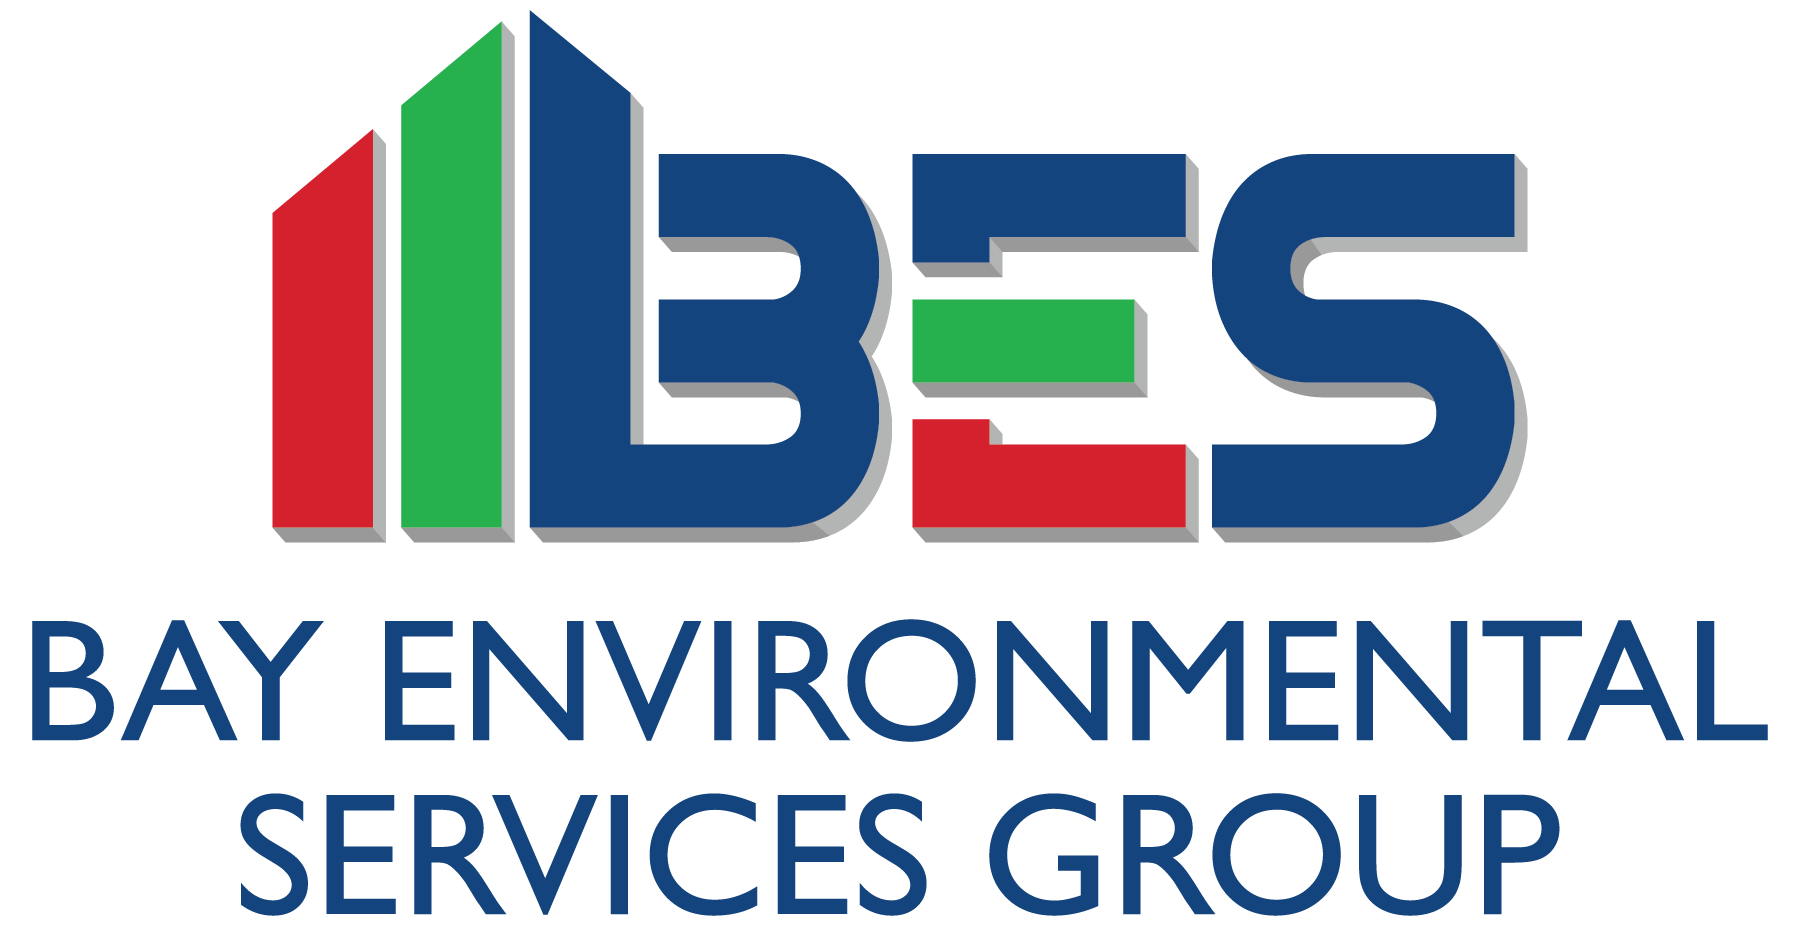 Bay Environmental Services Group